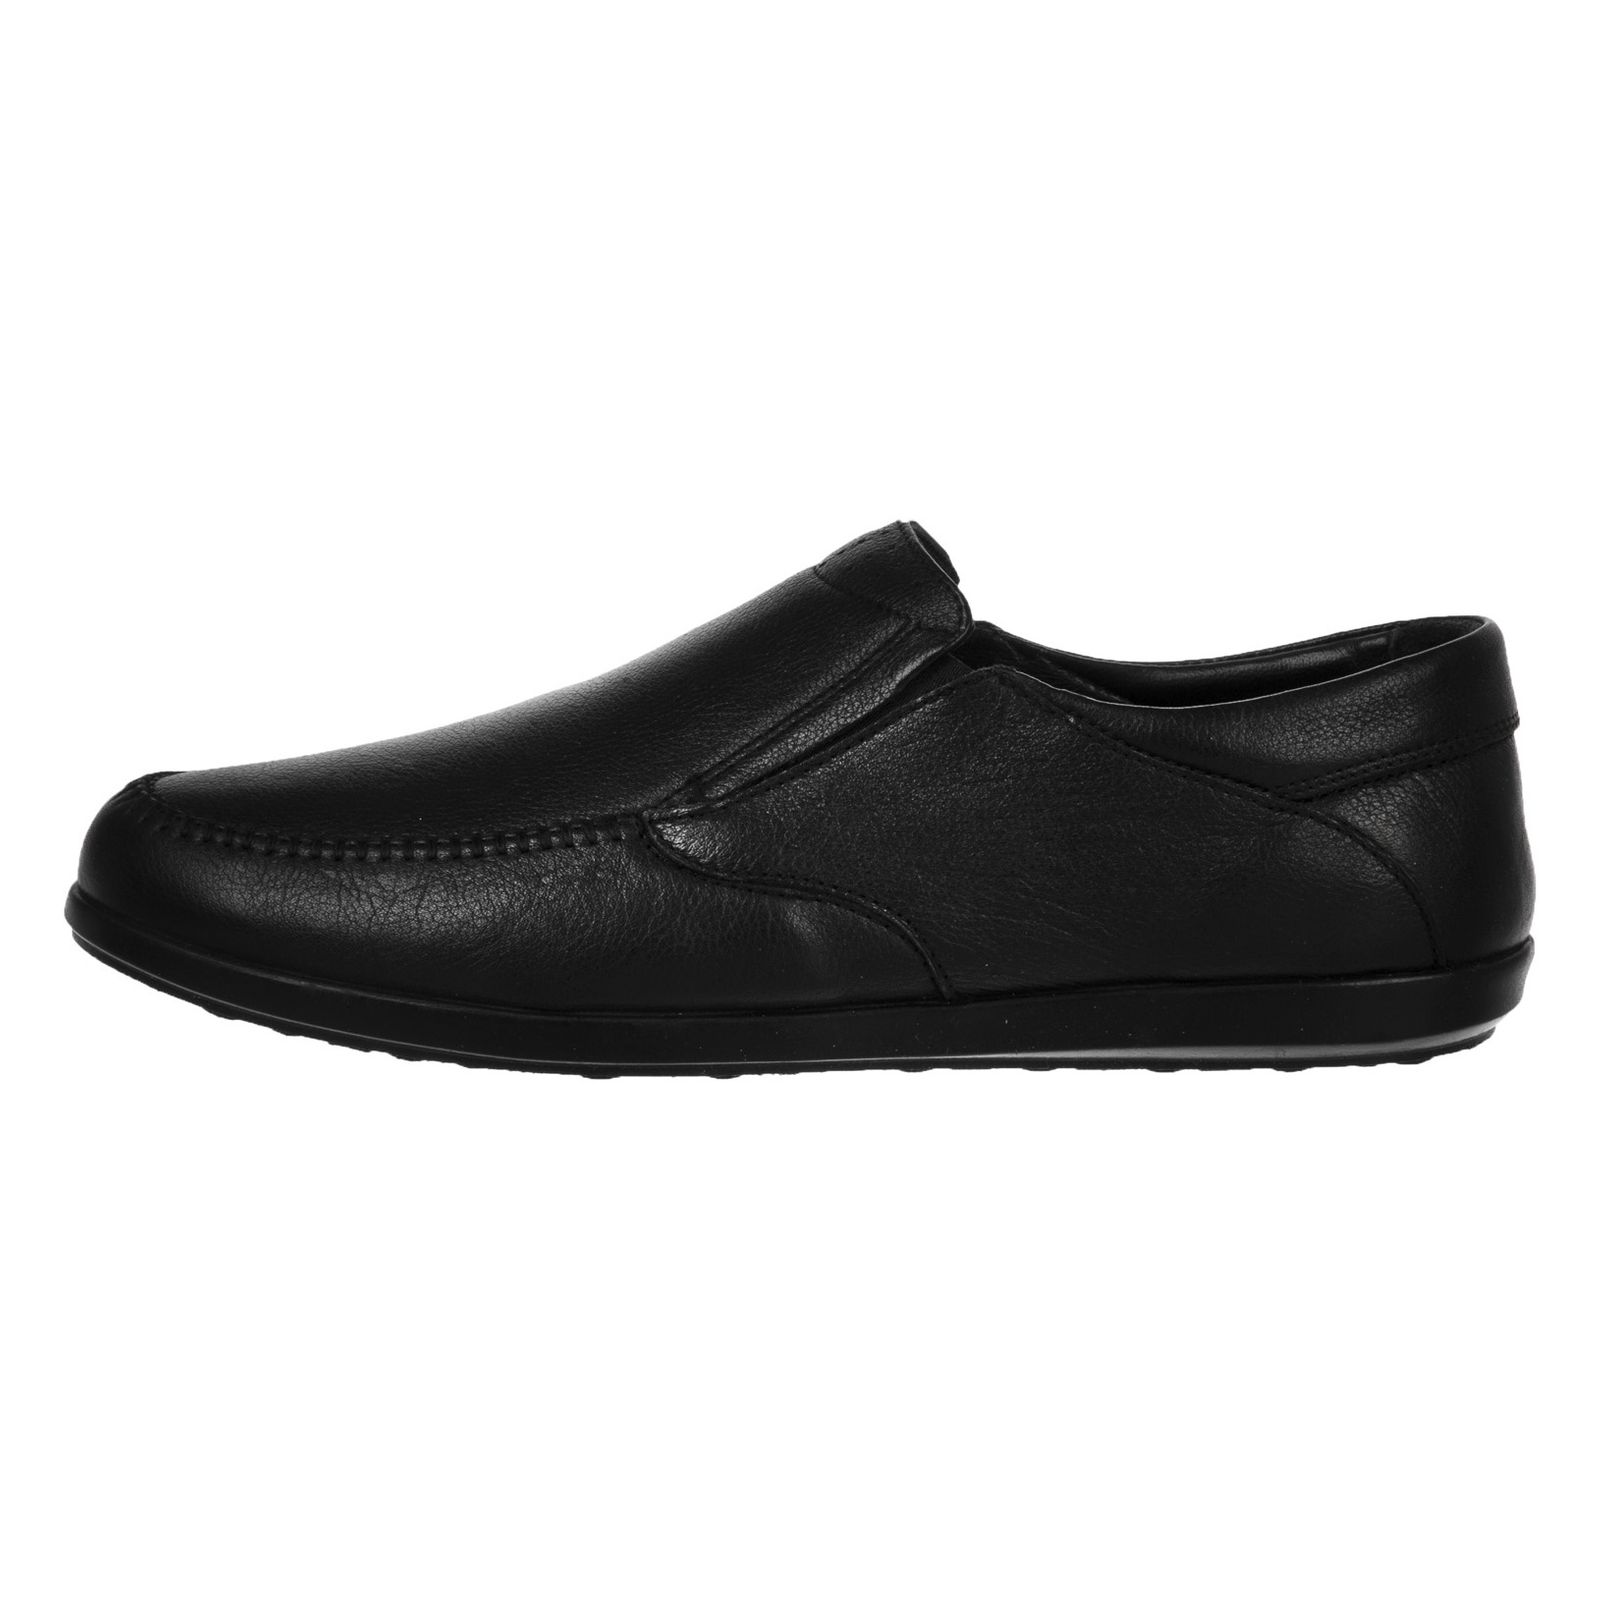 کفش روزمره مردانه فلوگارت مدل 100317221-101 - مشکی - 2